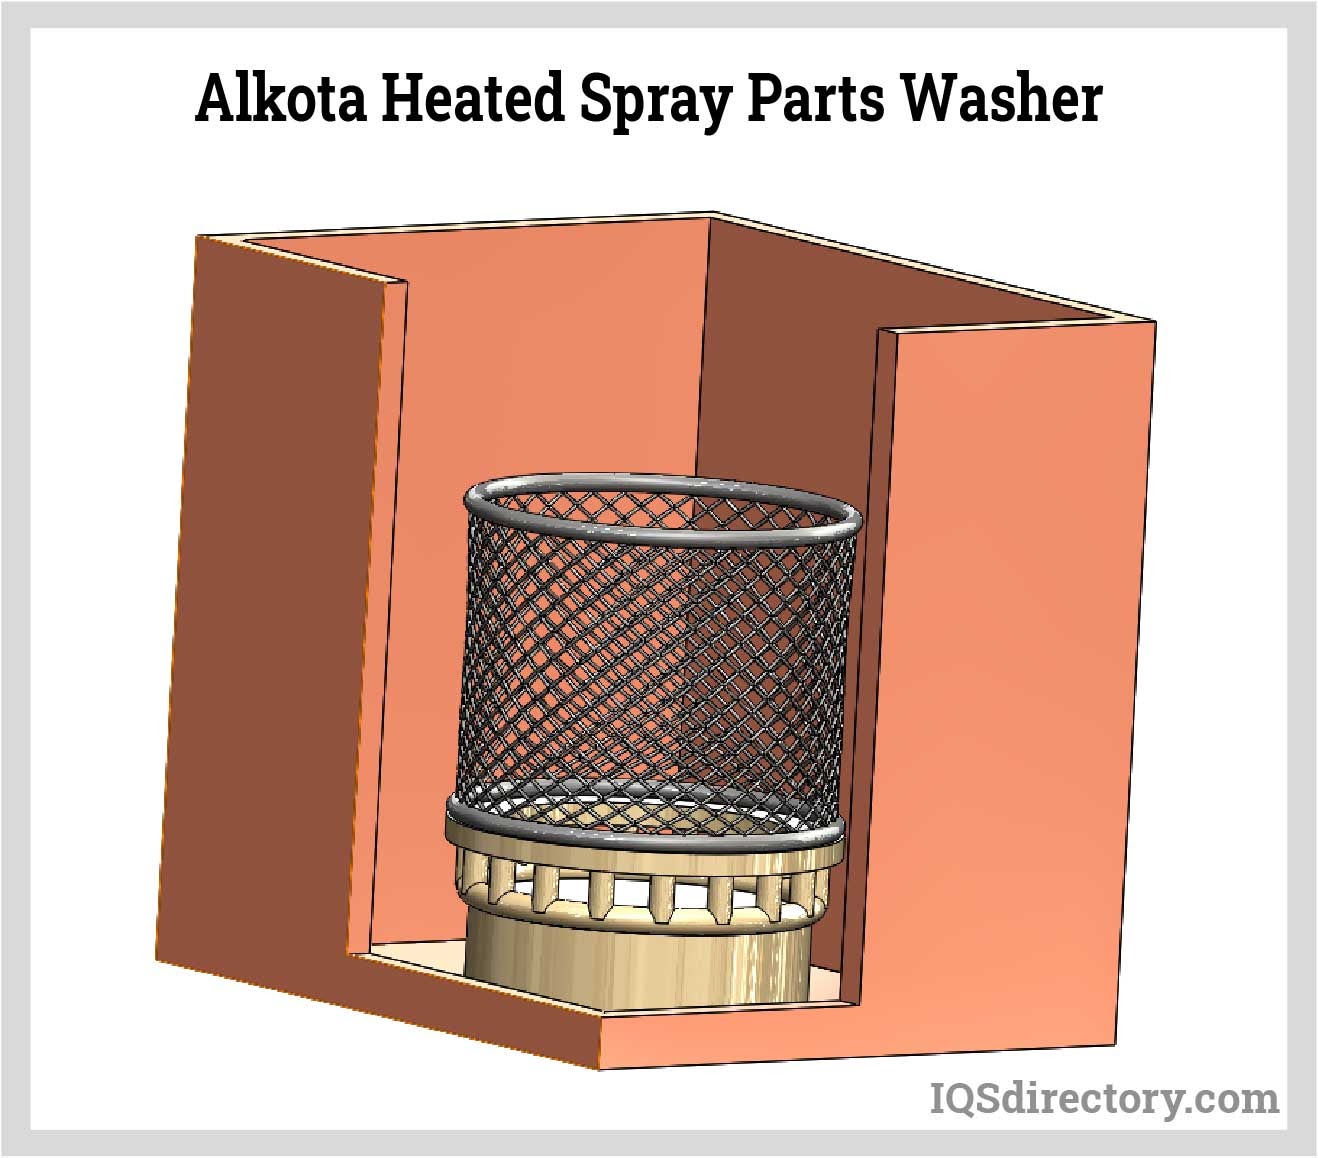 Alkota Heated Spray Parts Washer